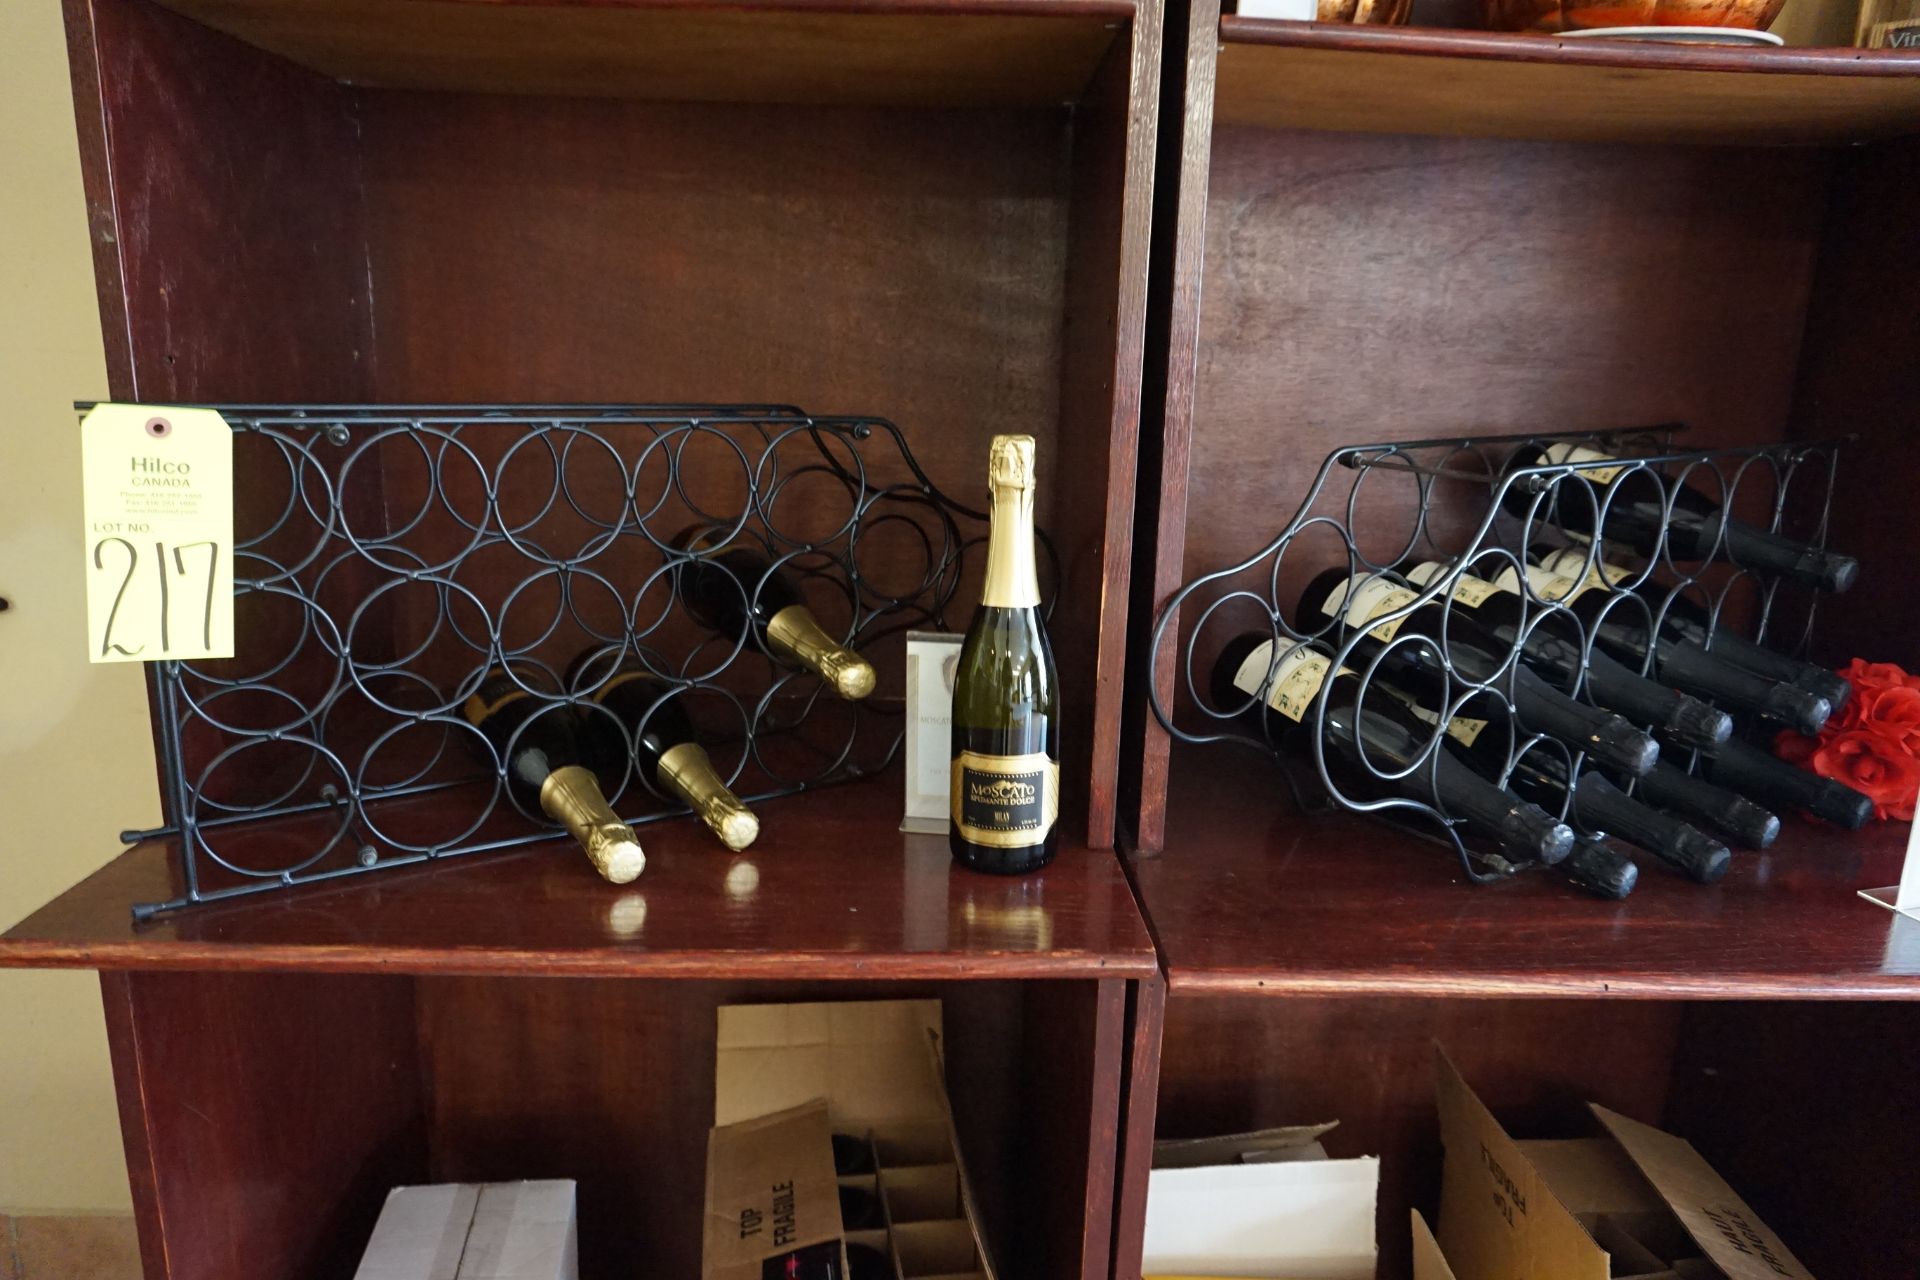 Asst. Decor, Wine Racks (Located on Shelving Displays)